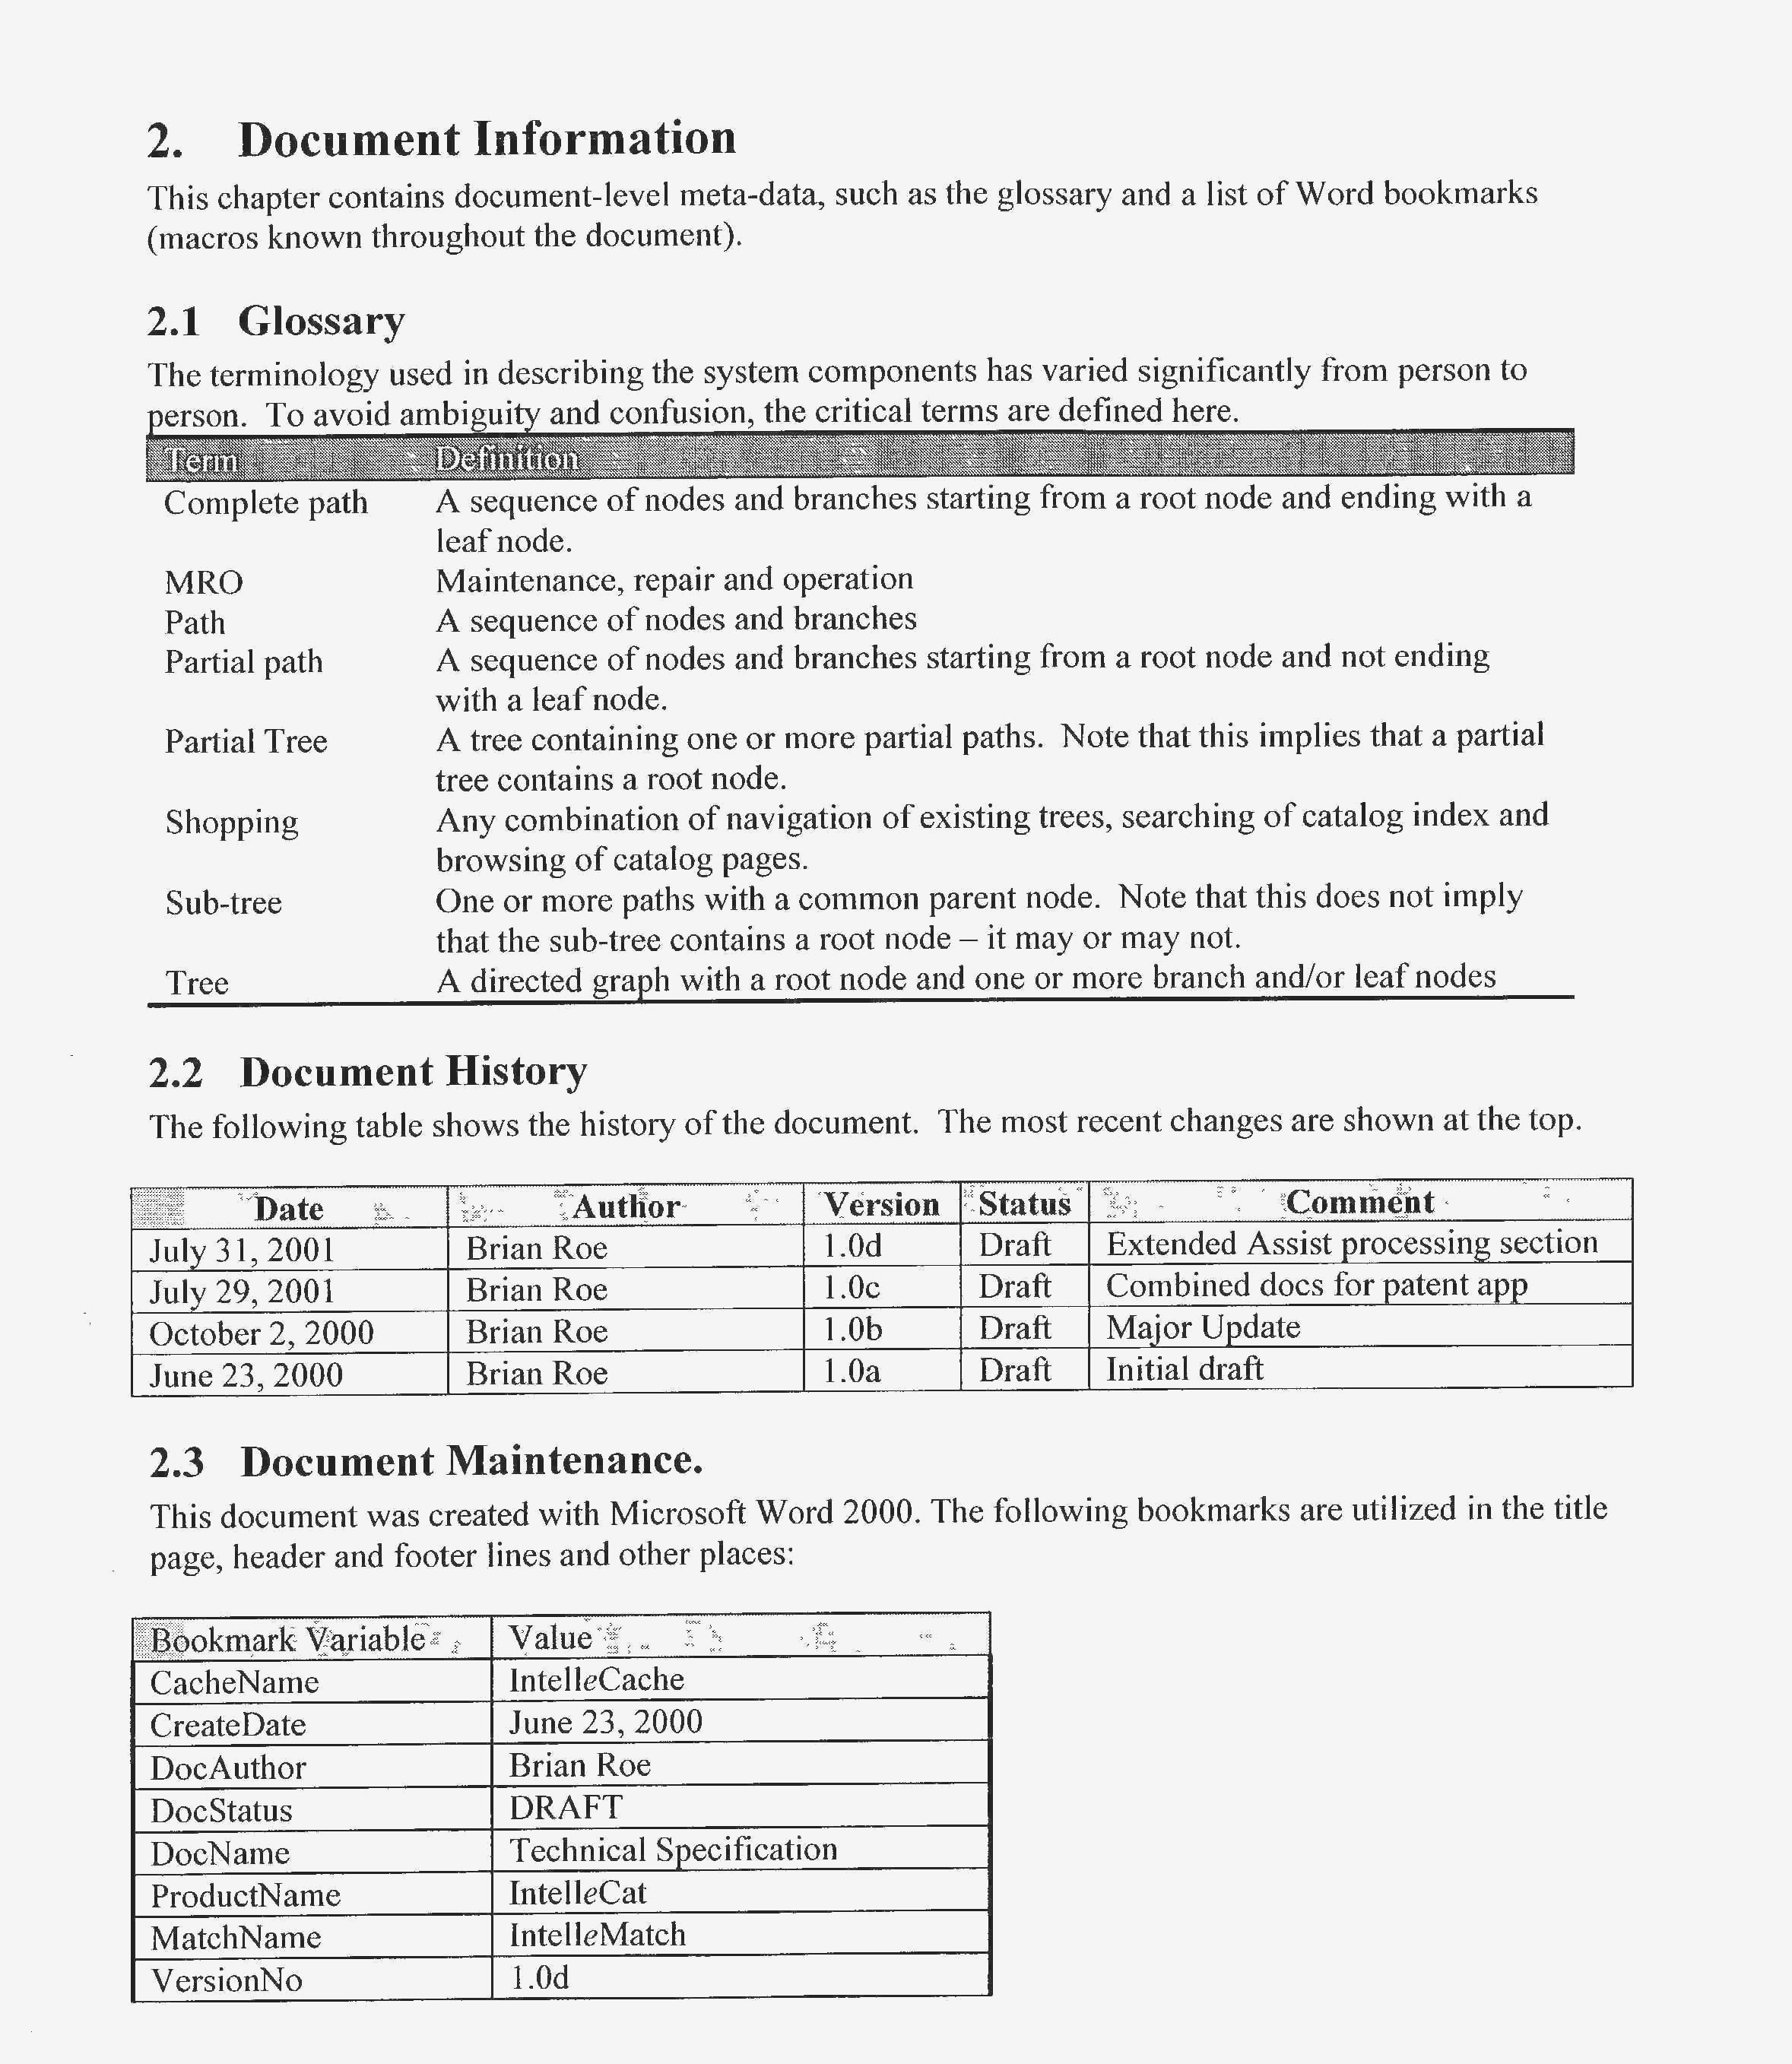 Resume Templates Microsoft Word Microsoft Word Resume Template 2019 Free Word Templates For Resumes Lovely Resume Template Microsoft Of Microsoft Word Resume Template 2019 resume templates microsoft word|wikiresume.com